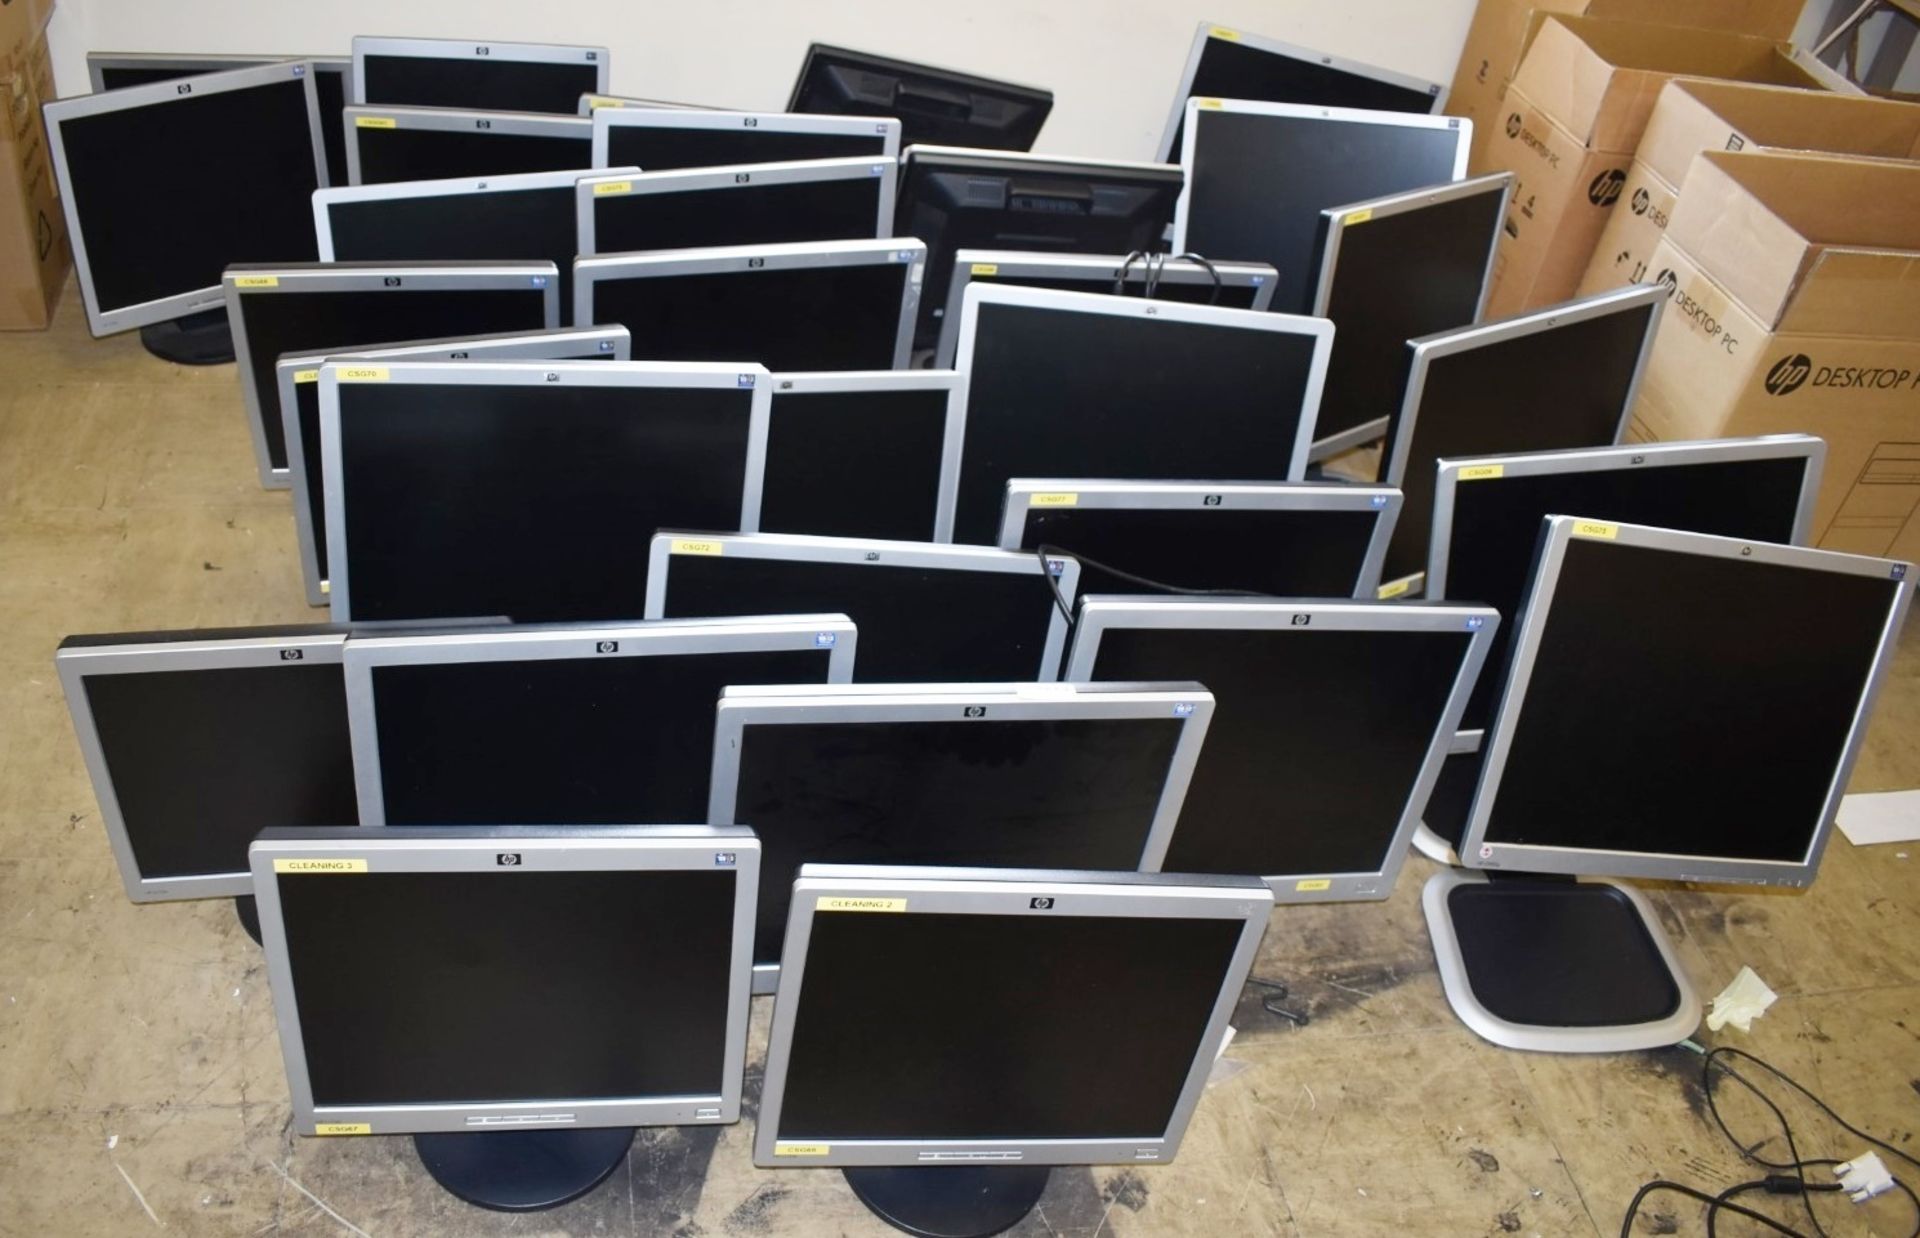 31 x HP Flatscreen Computer Monitors - Includes 15 Inch and 17 Inch Models - Ref VM273 IT -